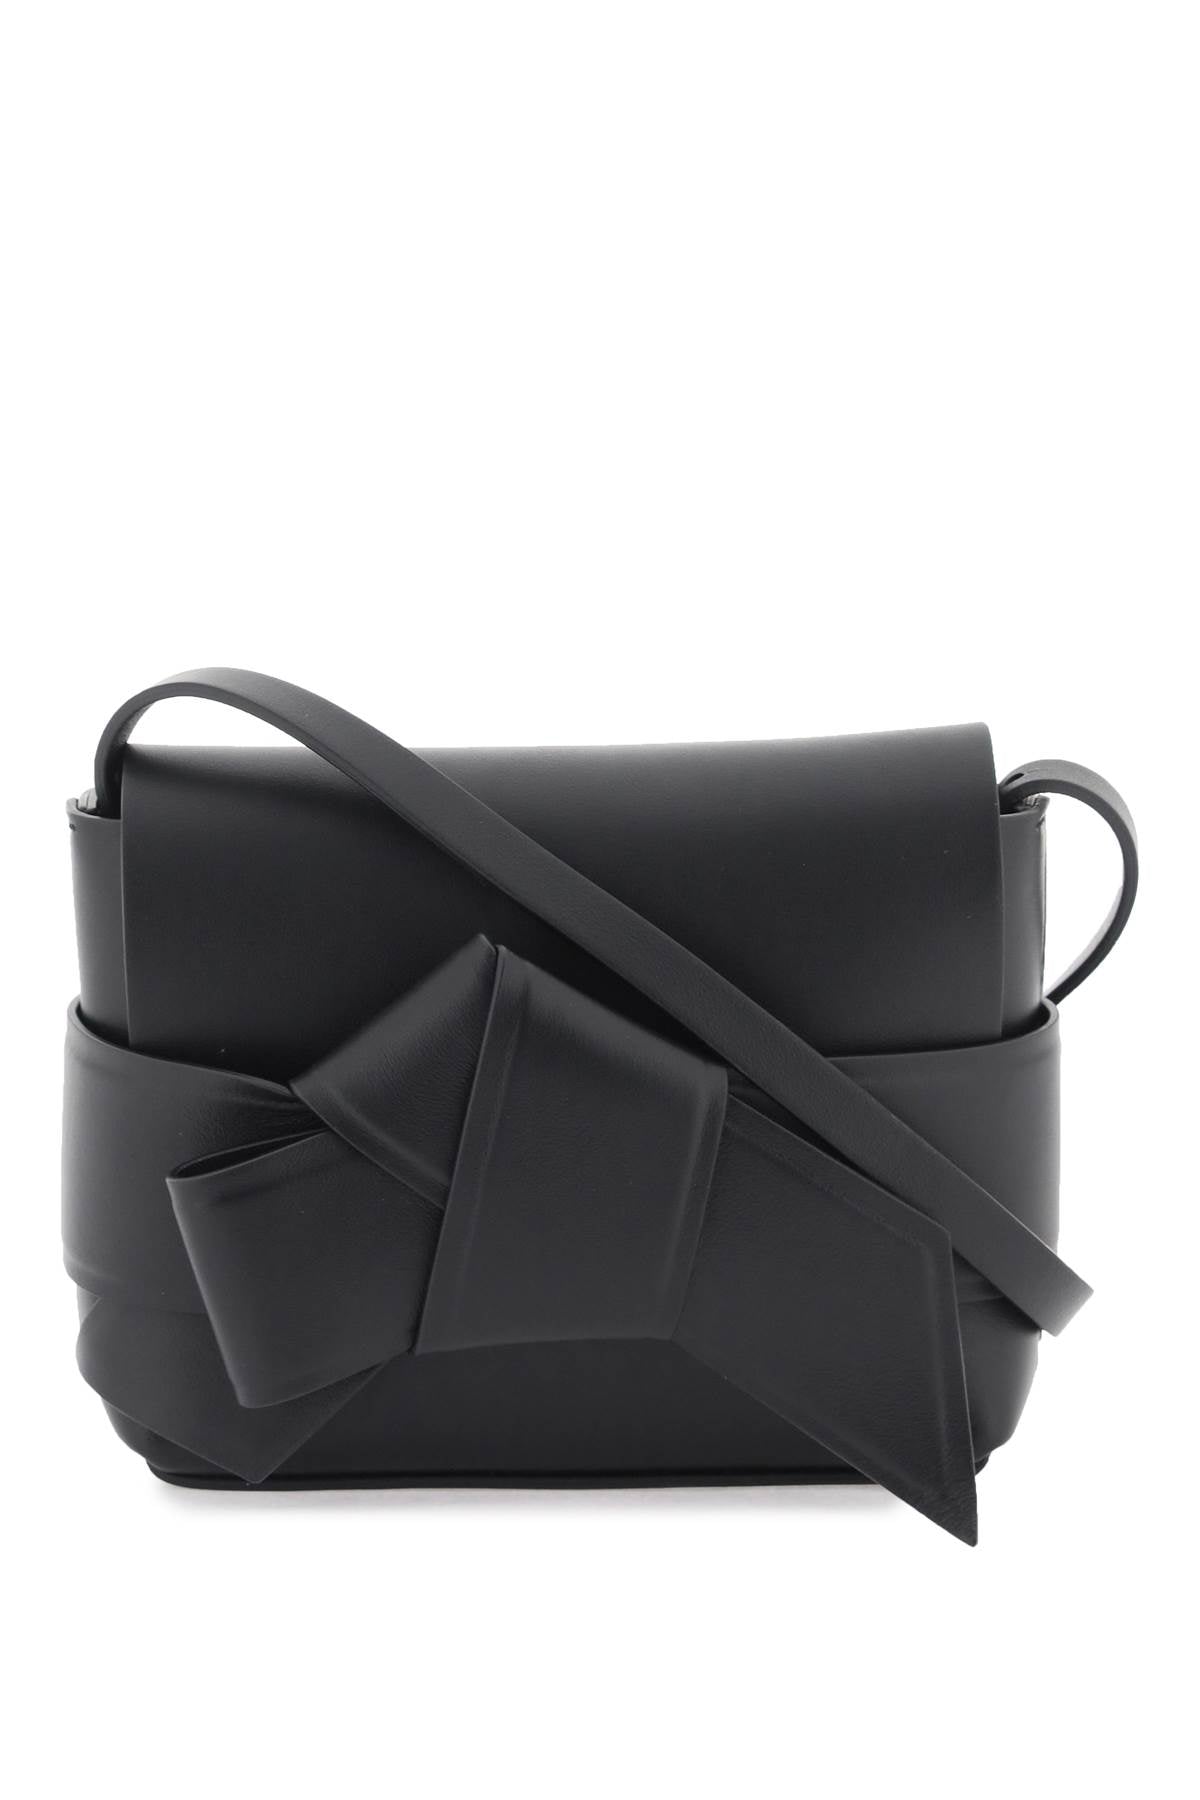 Shop Acne Studios Chic And Modern Black Leather Crossbody Handbag For Women